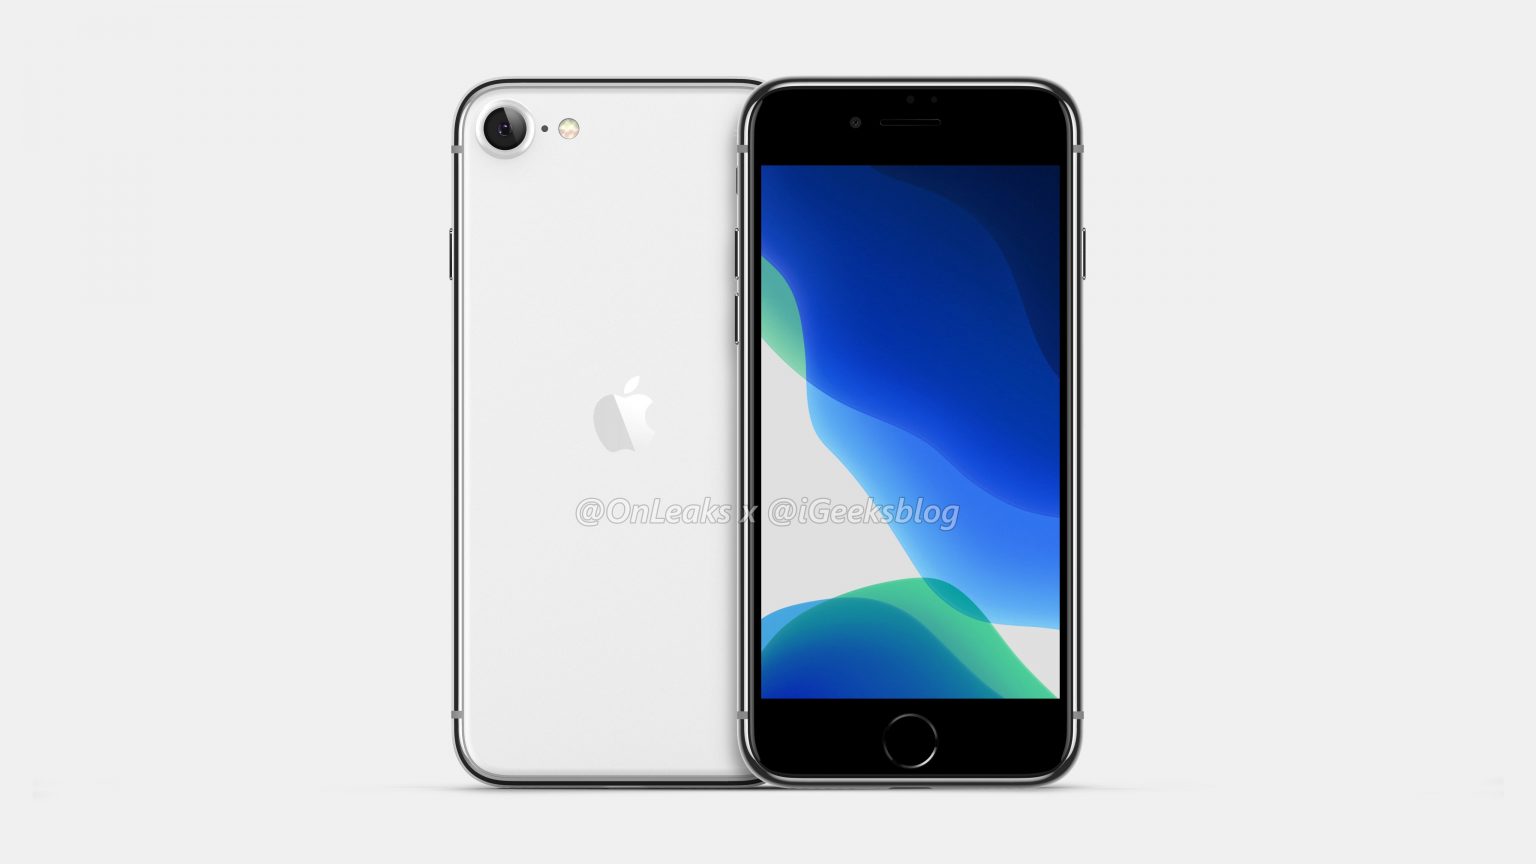 AppleIPhone SE 2 alias iPhone 9 yang murah dikatakan mempertahankan tombol beranda Touch ID